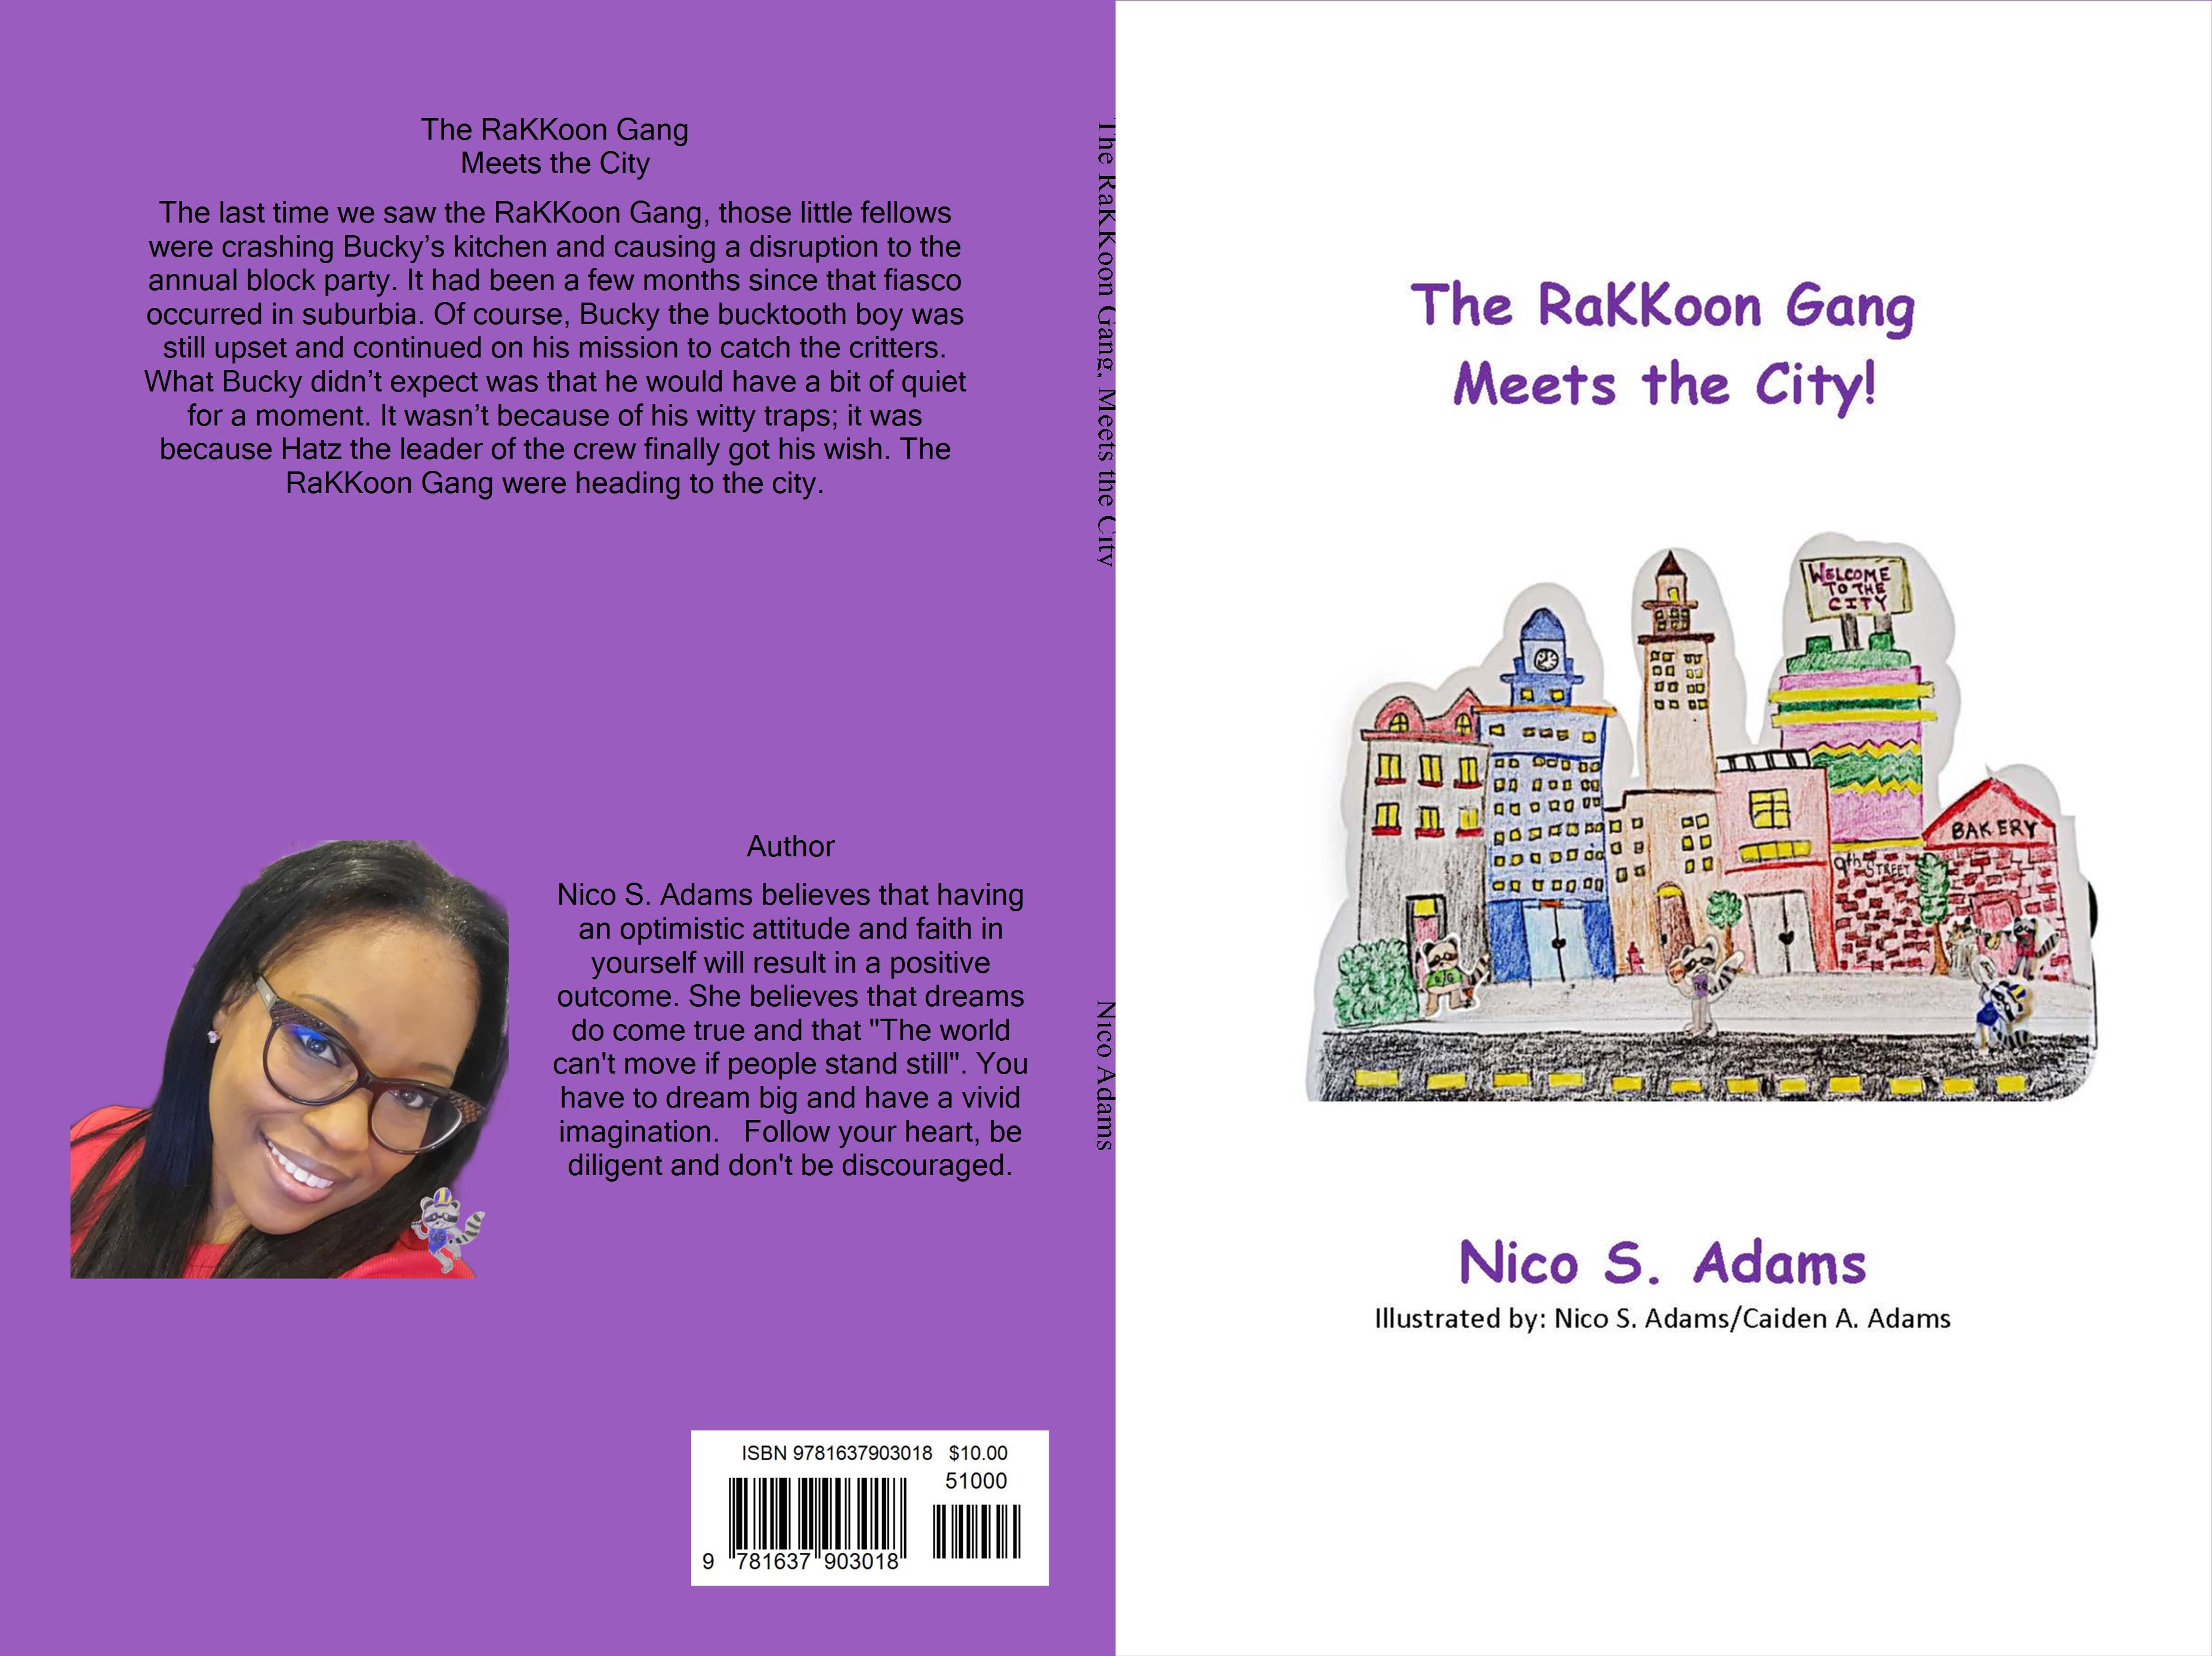 The RaKKoon Gang Meets the City cover image